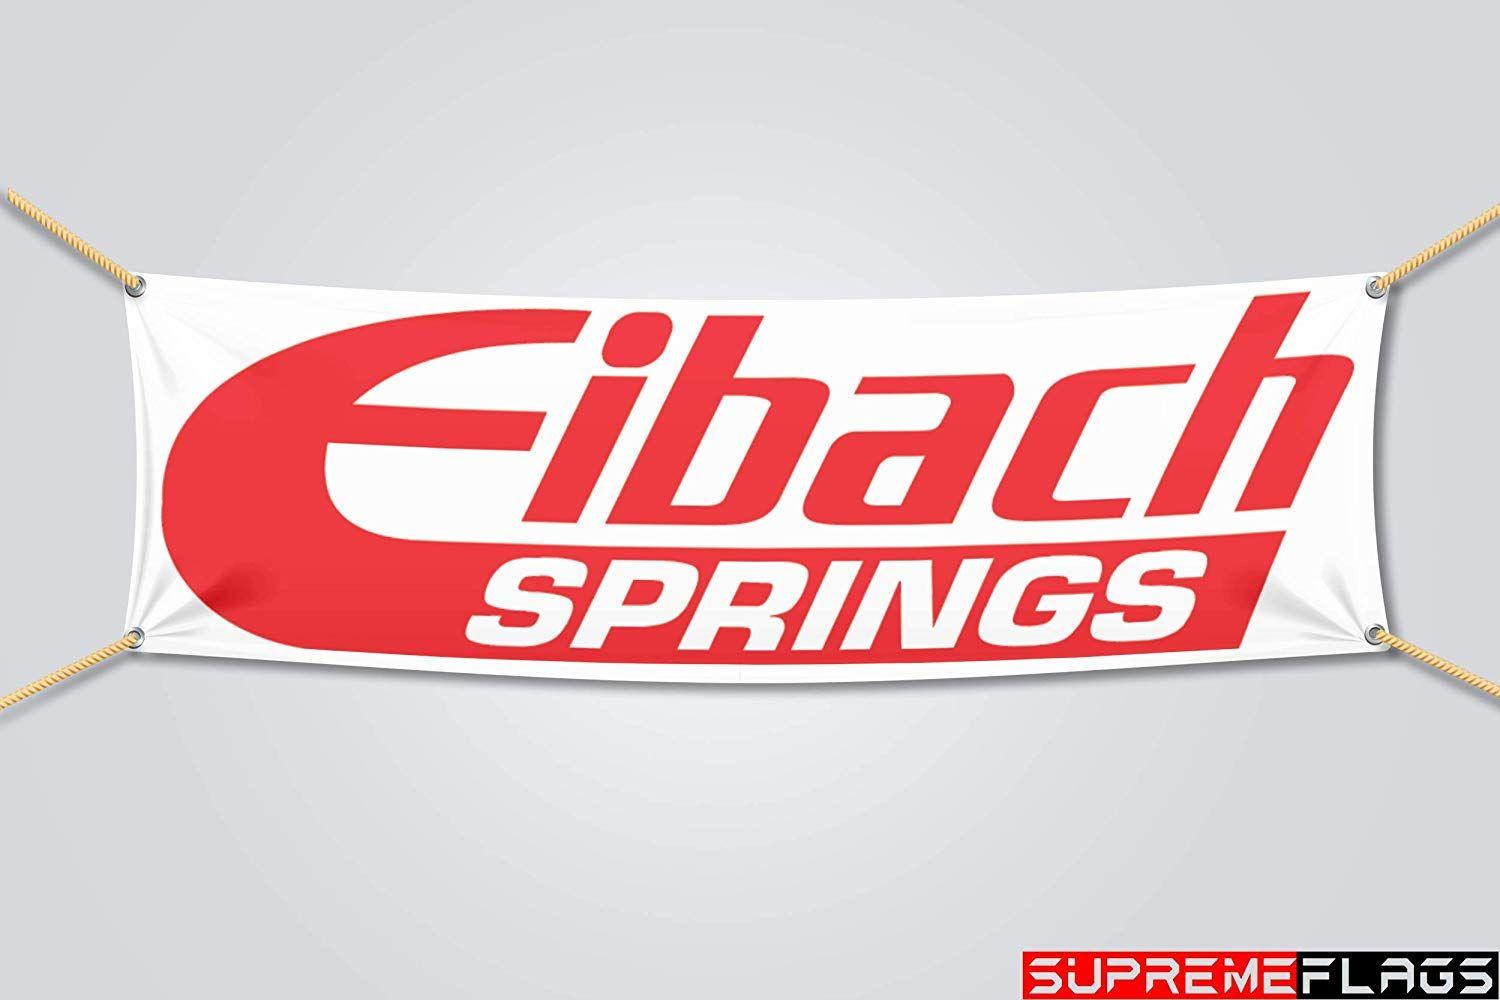 Eibach Logo - Amazon.com : Eibach Springs Flag Banner Car Racing Shop Garage